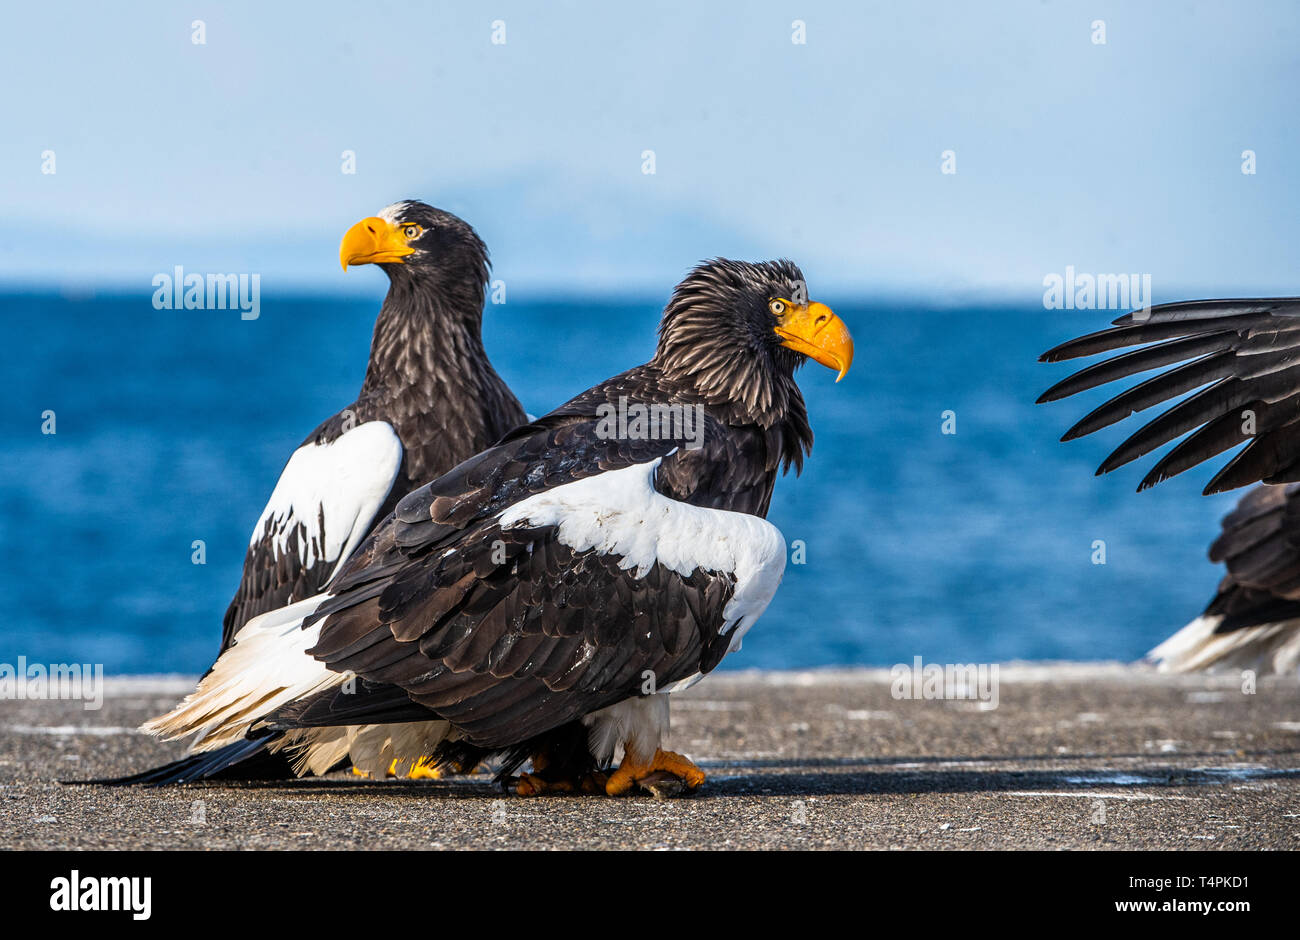 Adult Steller`s sea eagles. Close up portrait of Adult Steller's sea eagle. Scientific name: Haliaeetus pelagicus. Stock Photo